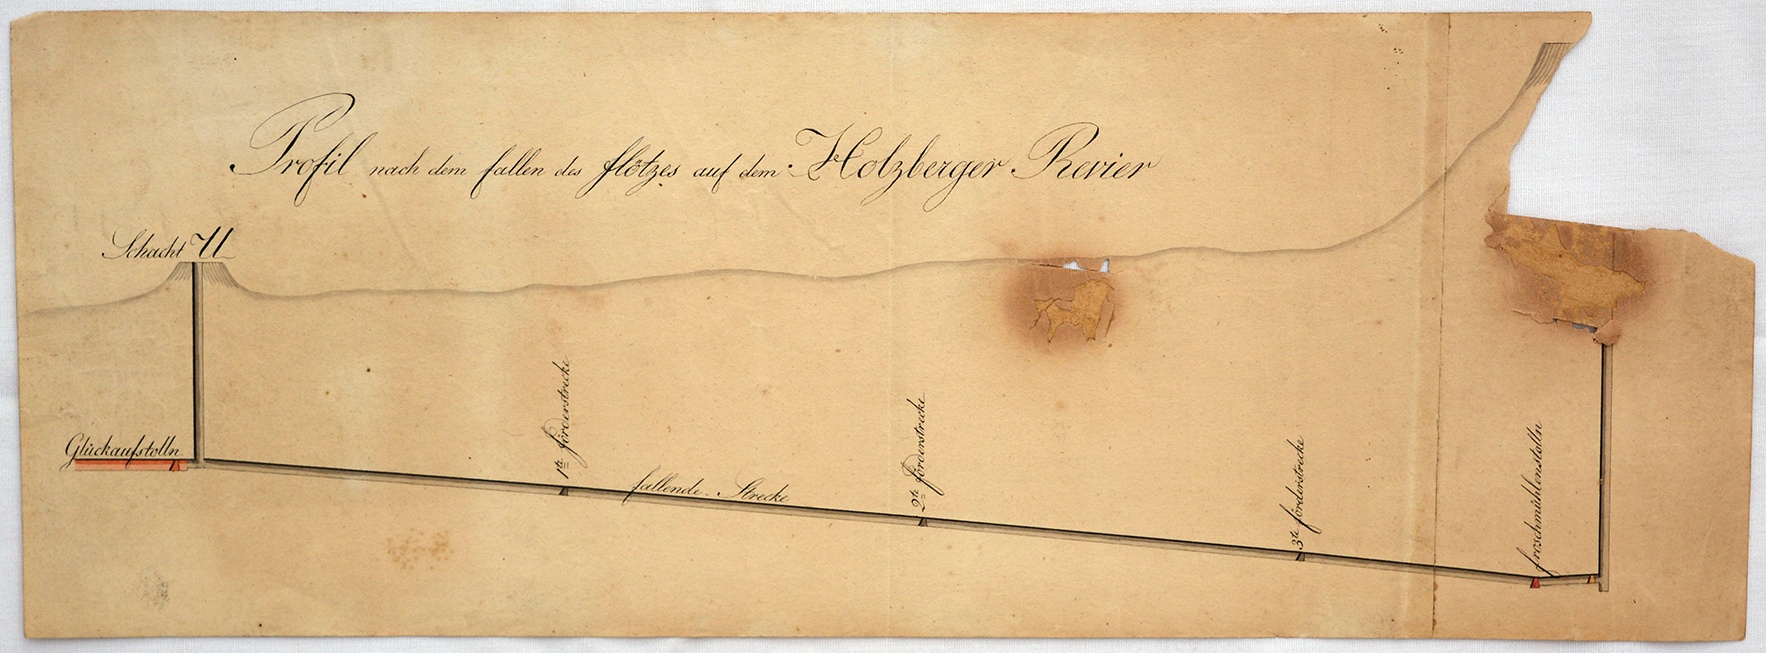 Profil nach dem fallen des flötzes auf dem Holzberger Revier (Mansfeld-Museum im Humboldt-Schloss CC BY-NC-SA)